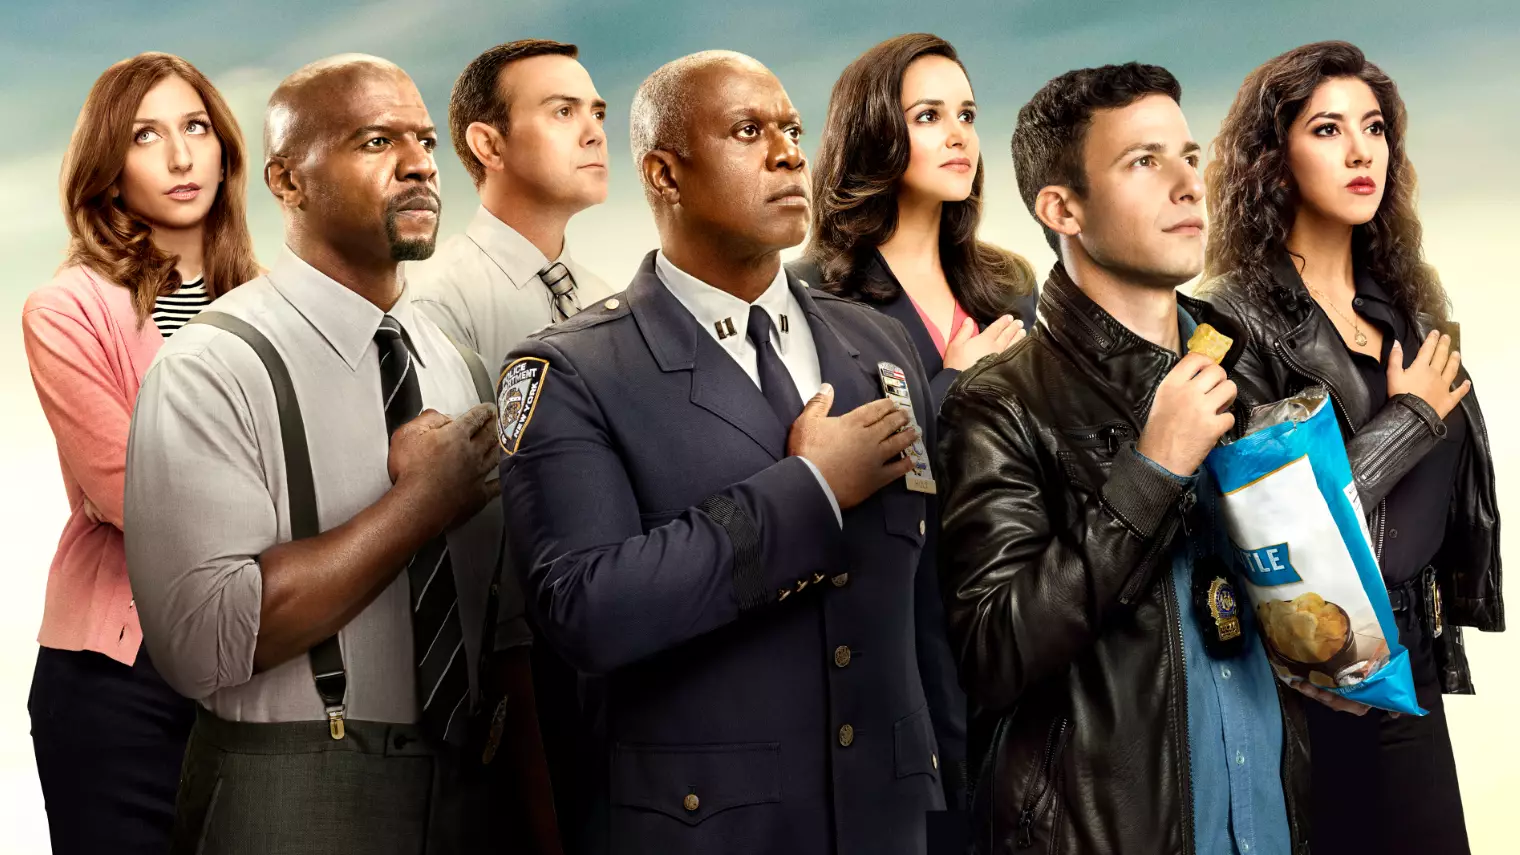 Brooklyn Nine-Nine Season 7 Is Coming To Netflix On March 26th